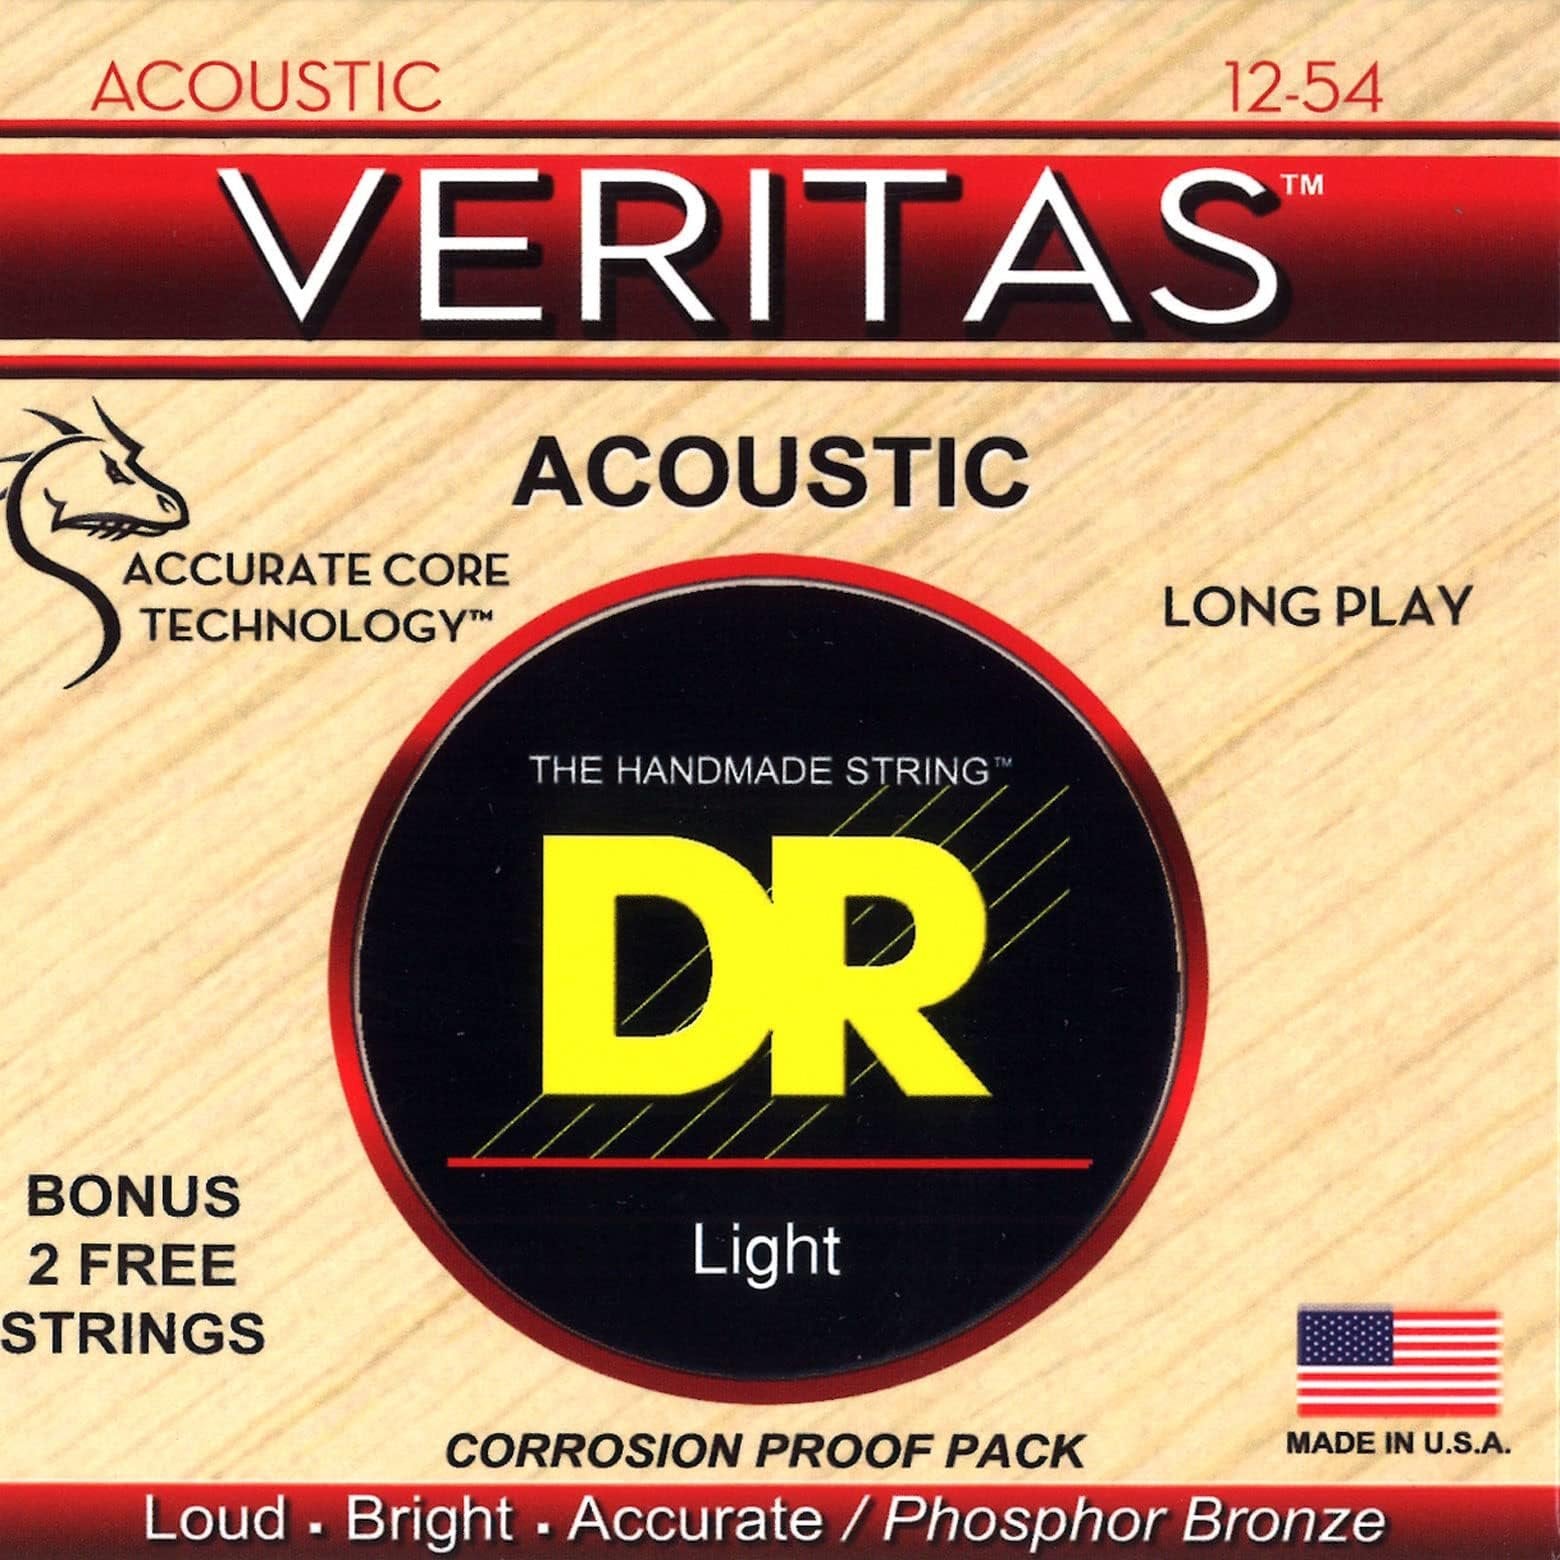 VTA-12-3PK Veritas Coated Core Technology Acoustic Guitar Strings, Light 12-54, 3-Pack